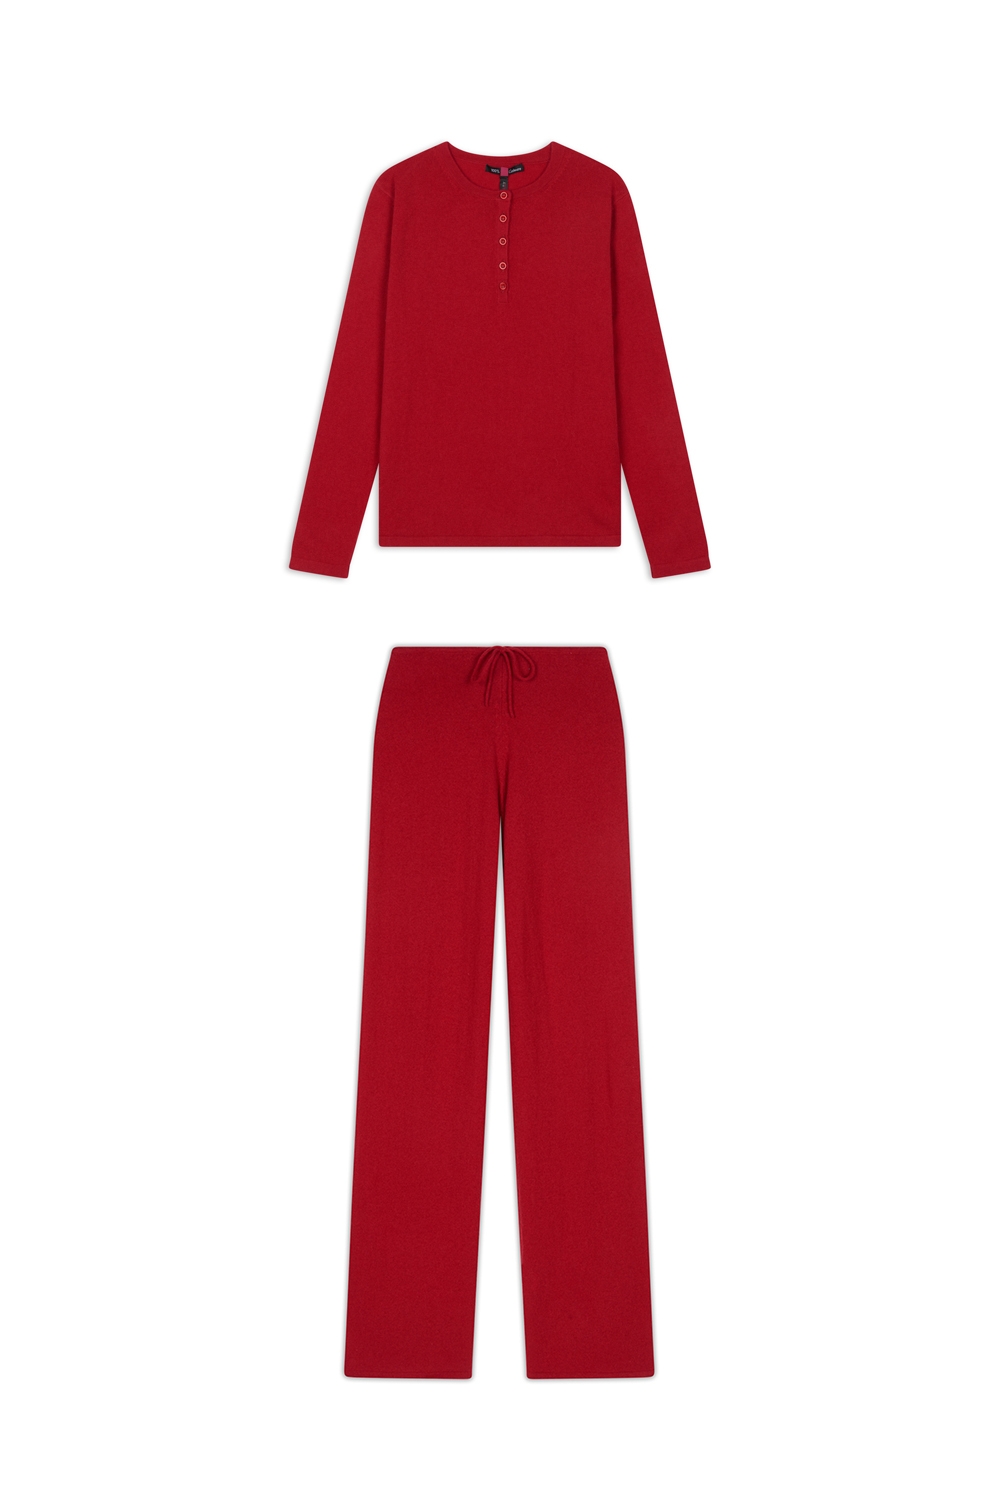 Cachemire pyjama femme loan rouge velours s